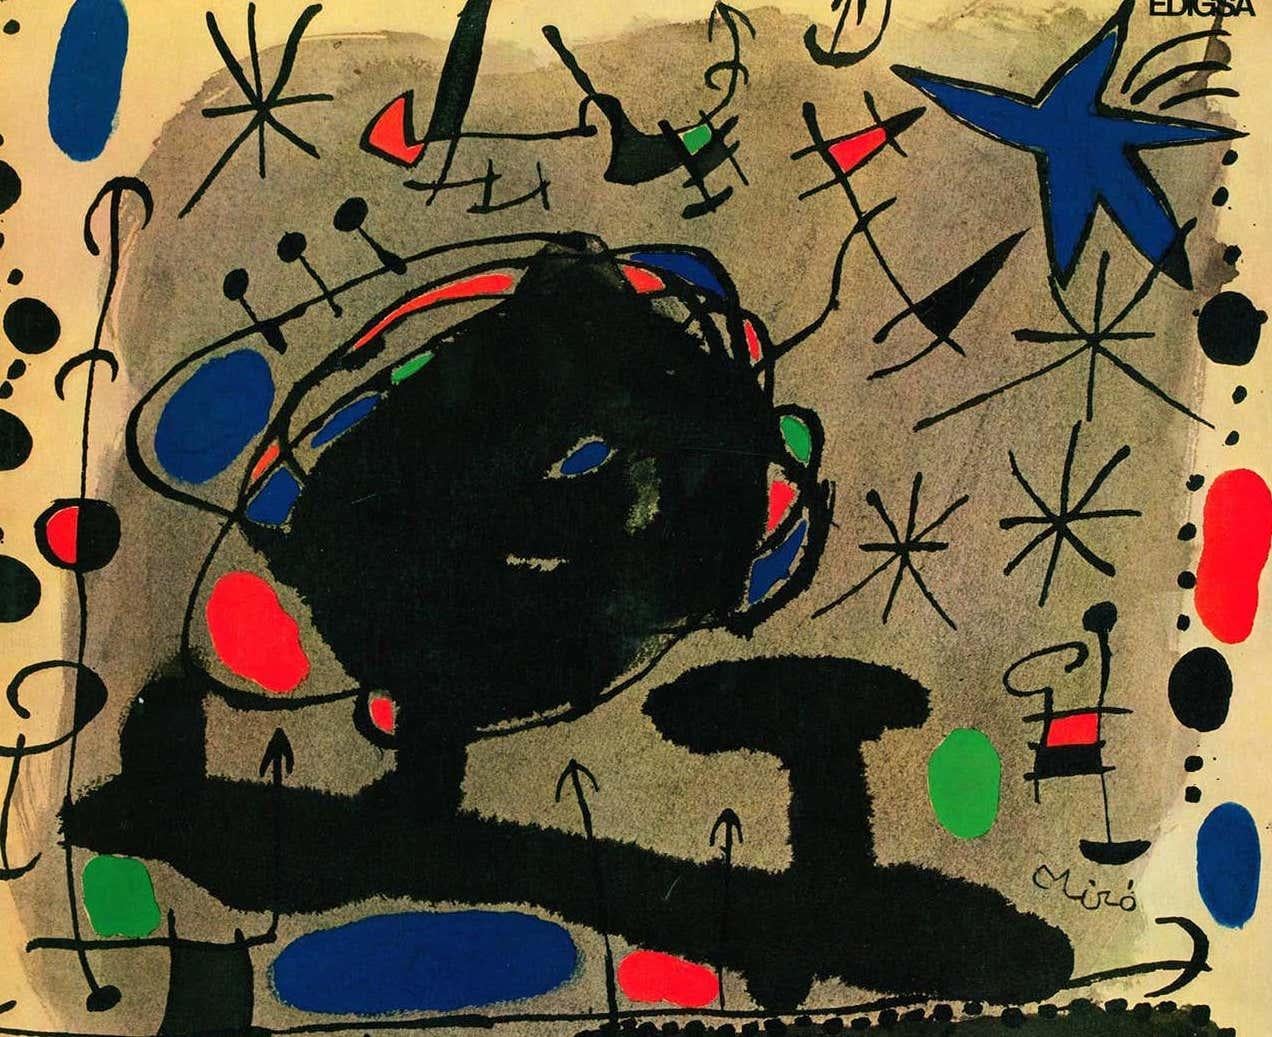 1960s Joan Miró vinyl album art: 
Raimon and Joan Miró were close friends that first collaborated on the 1966 album Cançons de la roda del temps. In 1979, Miró designed a cover for the album Quan la aigua queixa, including the name of Raimon in